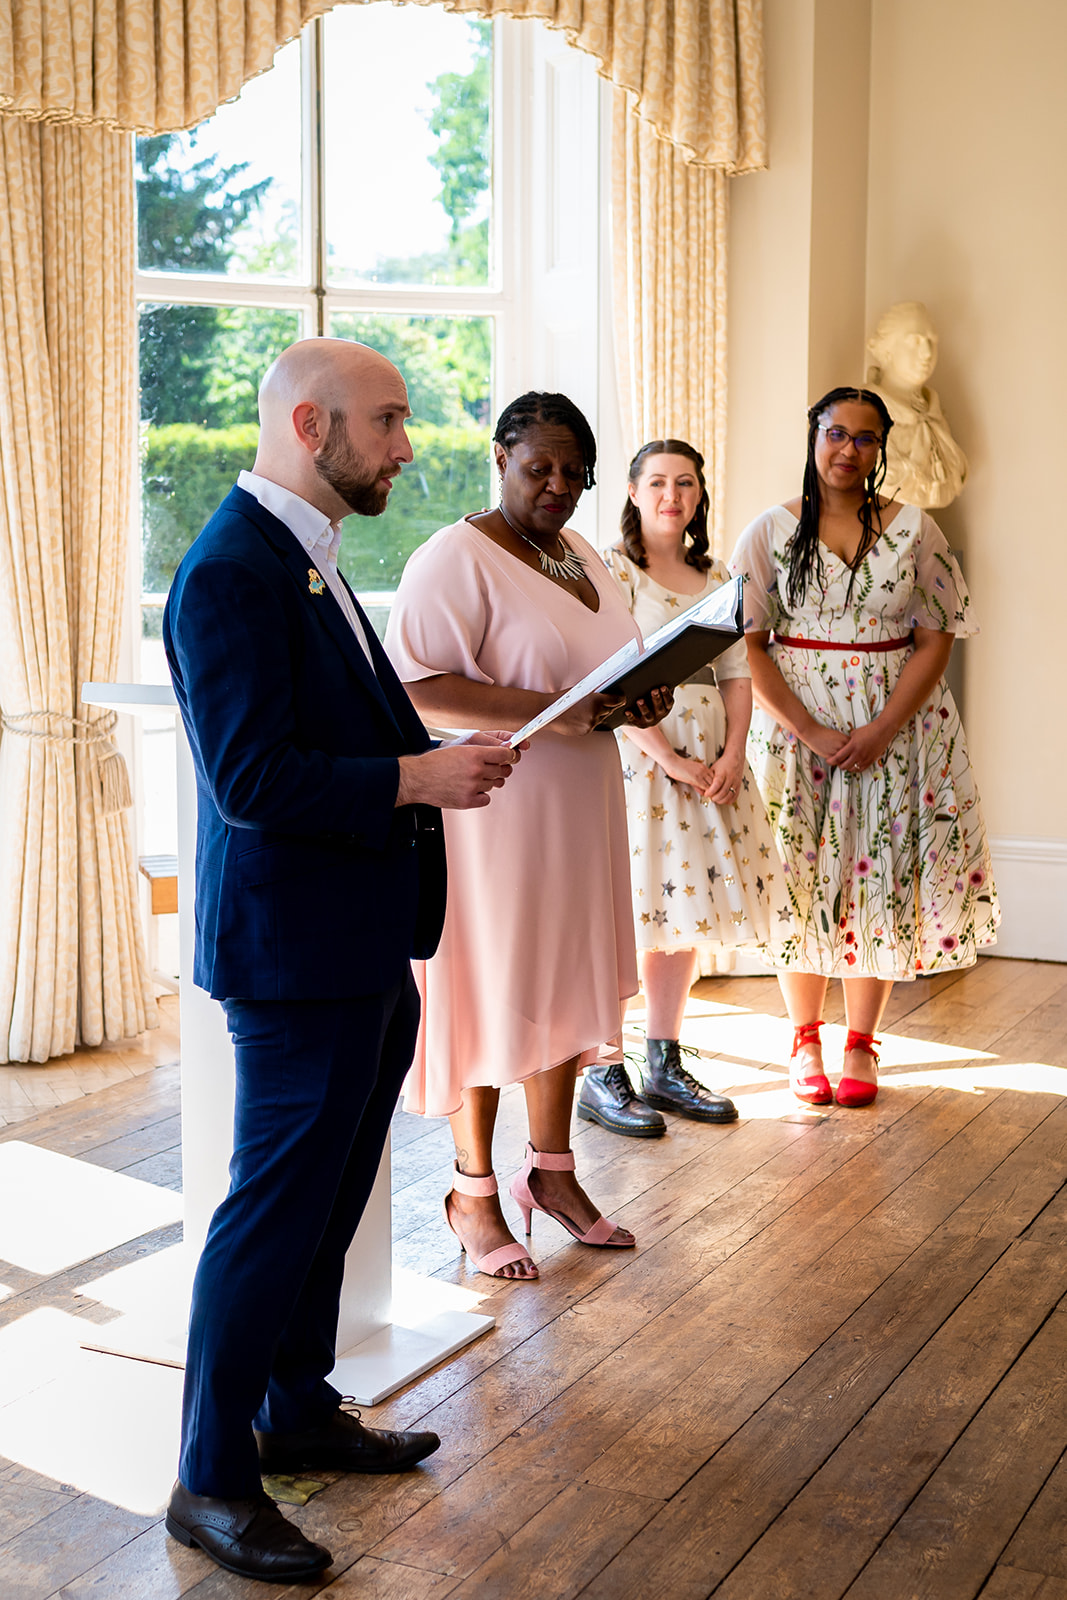 ceremony with celebrant at LGBTQ + Kew Gardens wedding